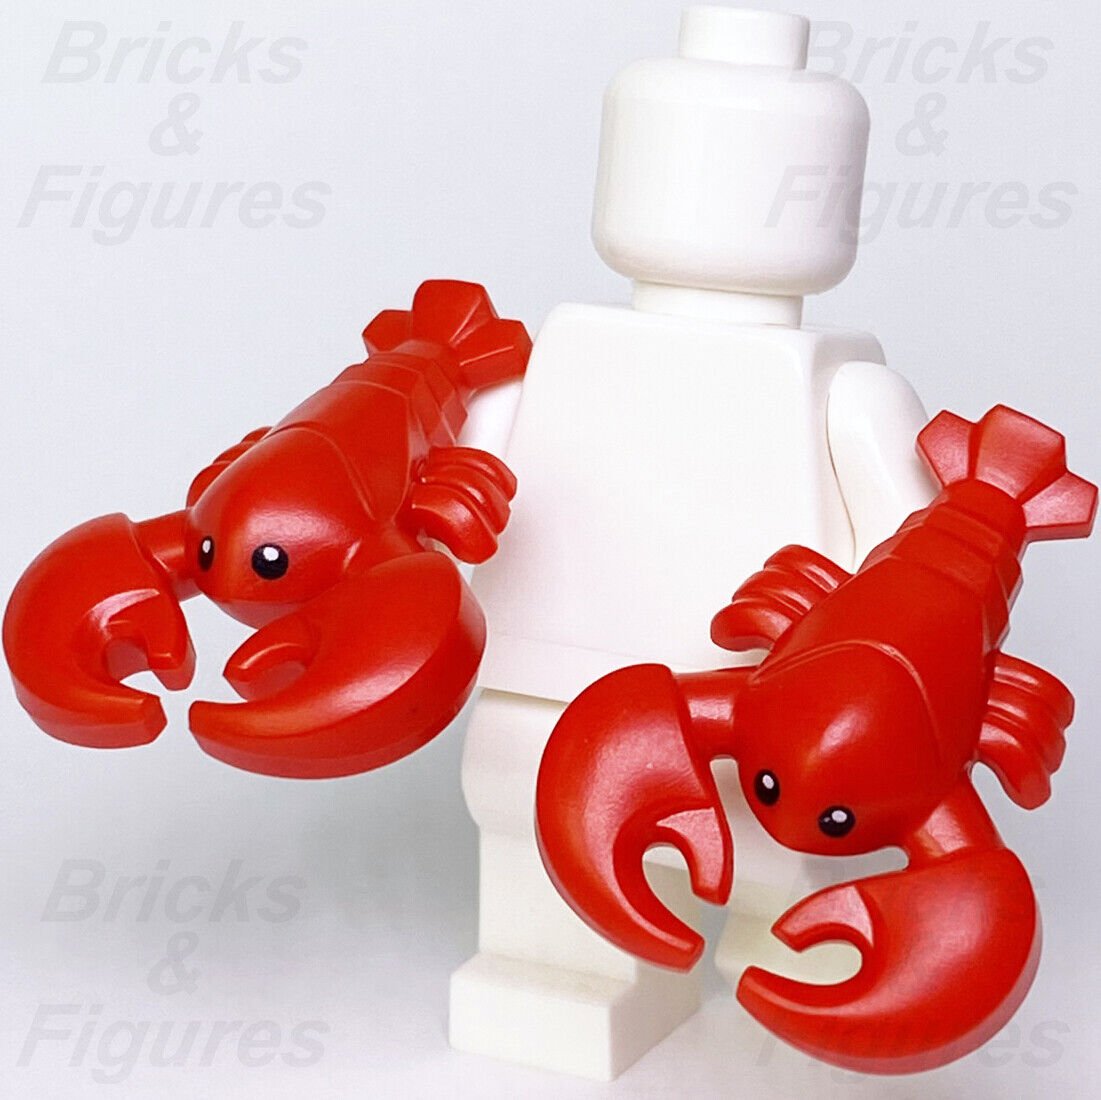 2 x LEGO Lobster Red Animal Minifigure City Town Animal Part 27152pb01 21310 - Bricks & Figures